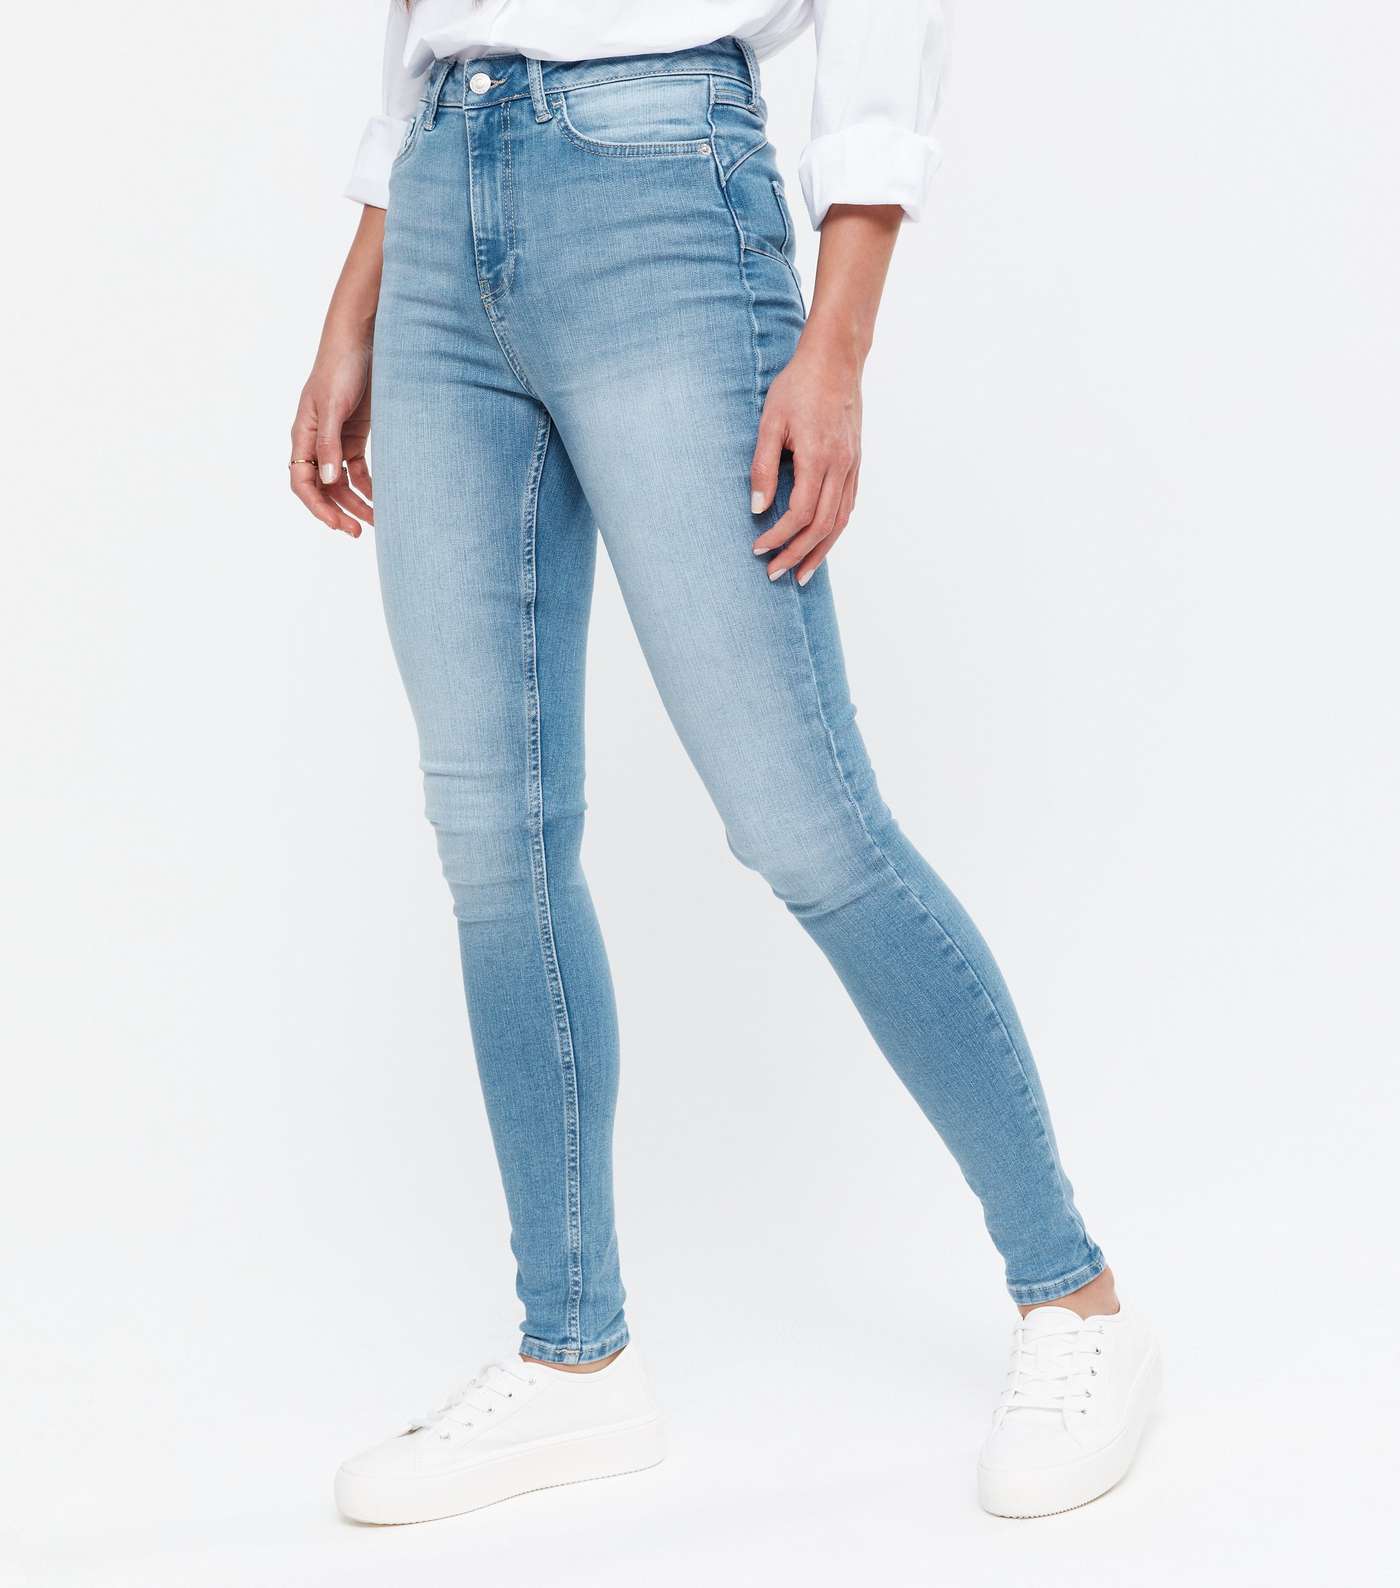 Tall Pale Blue 'Lift & Shape' Jenna Skinny Jeans Image 2